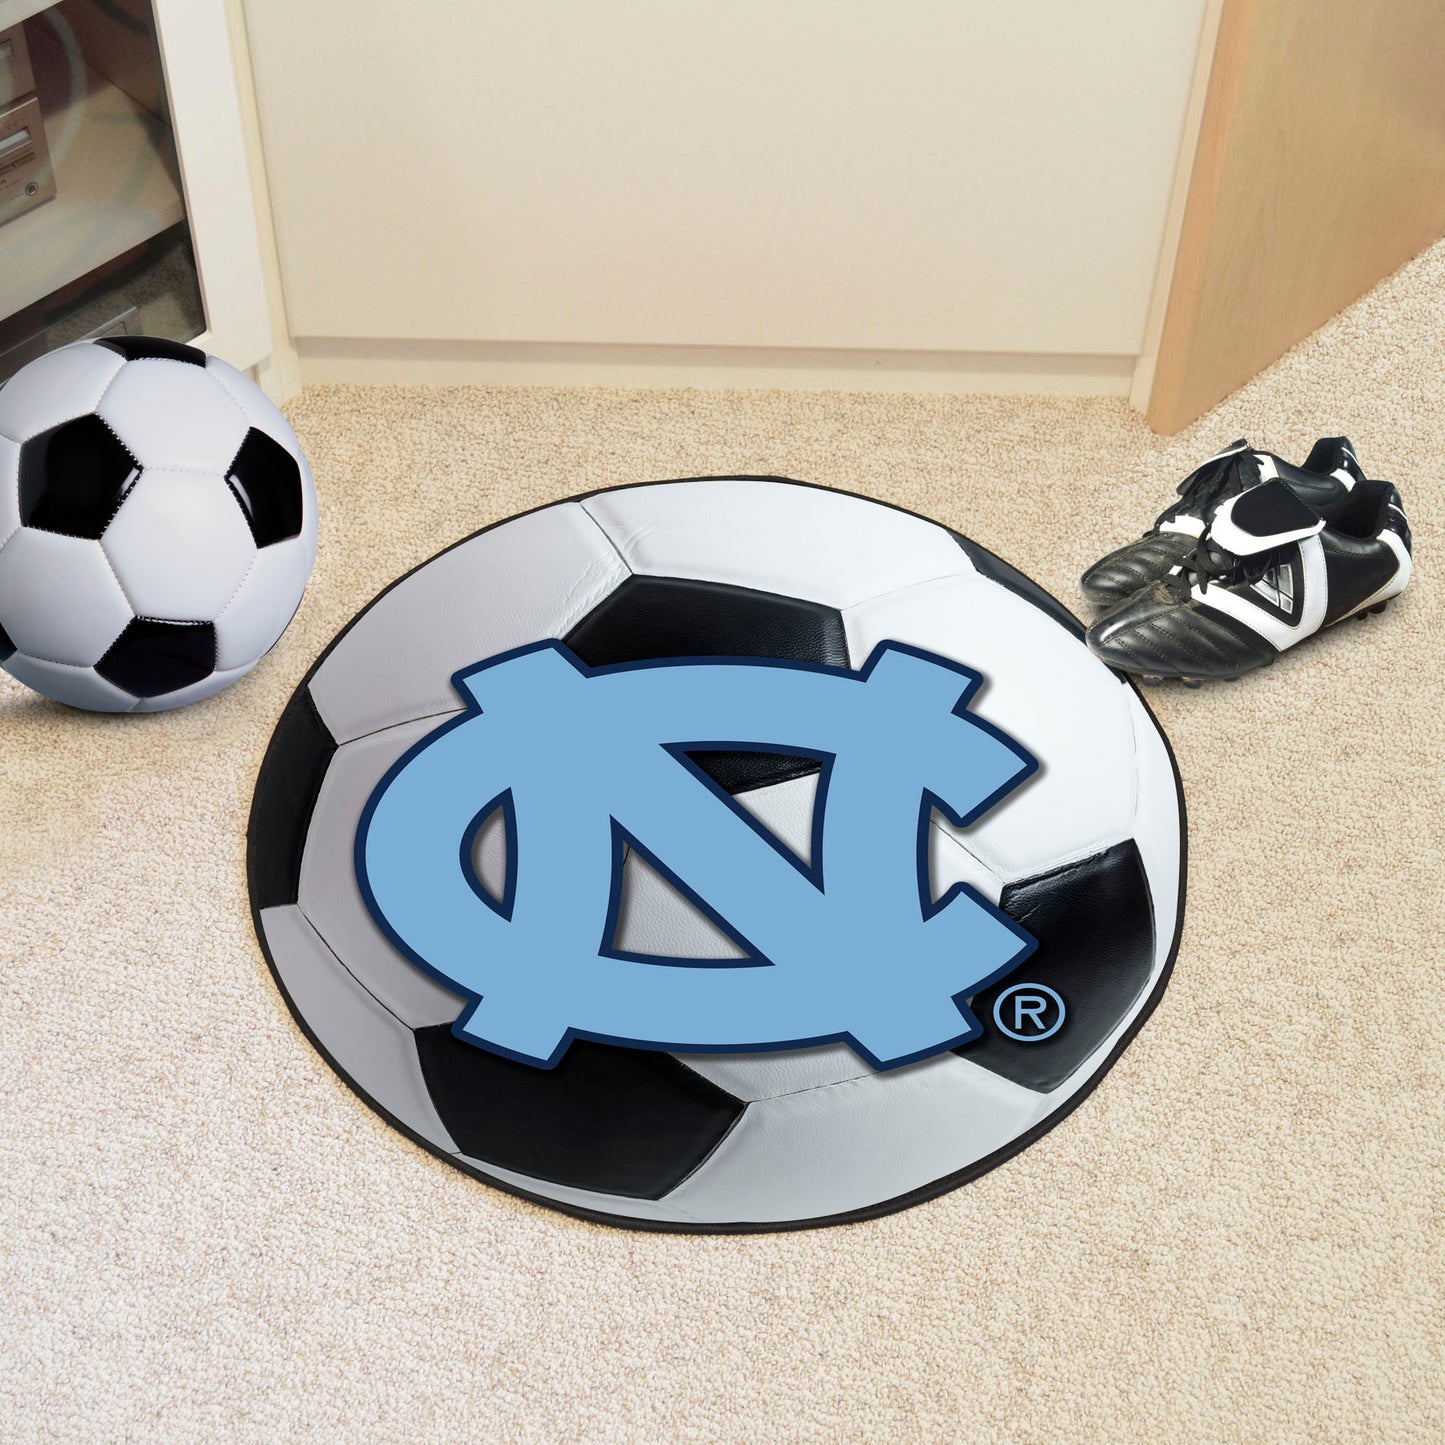 North Carolina Tar Heels Soccer Ball Mat with NC Logo by Fanmats